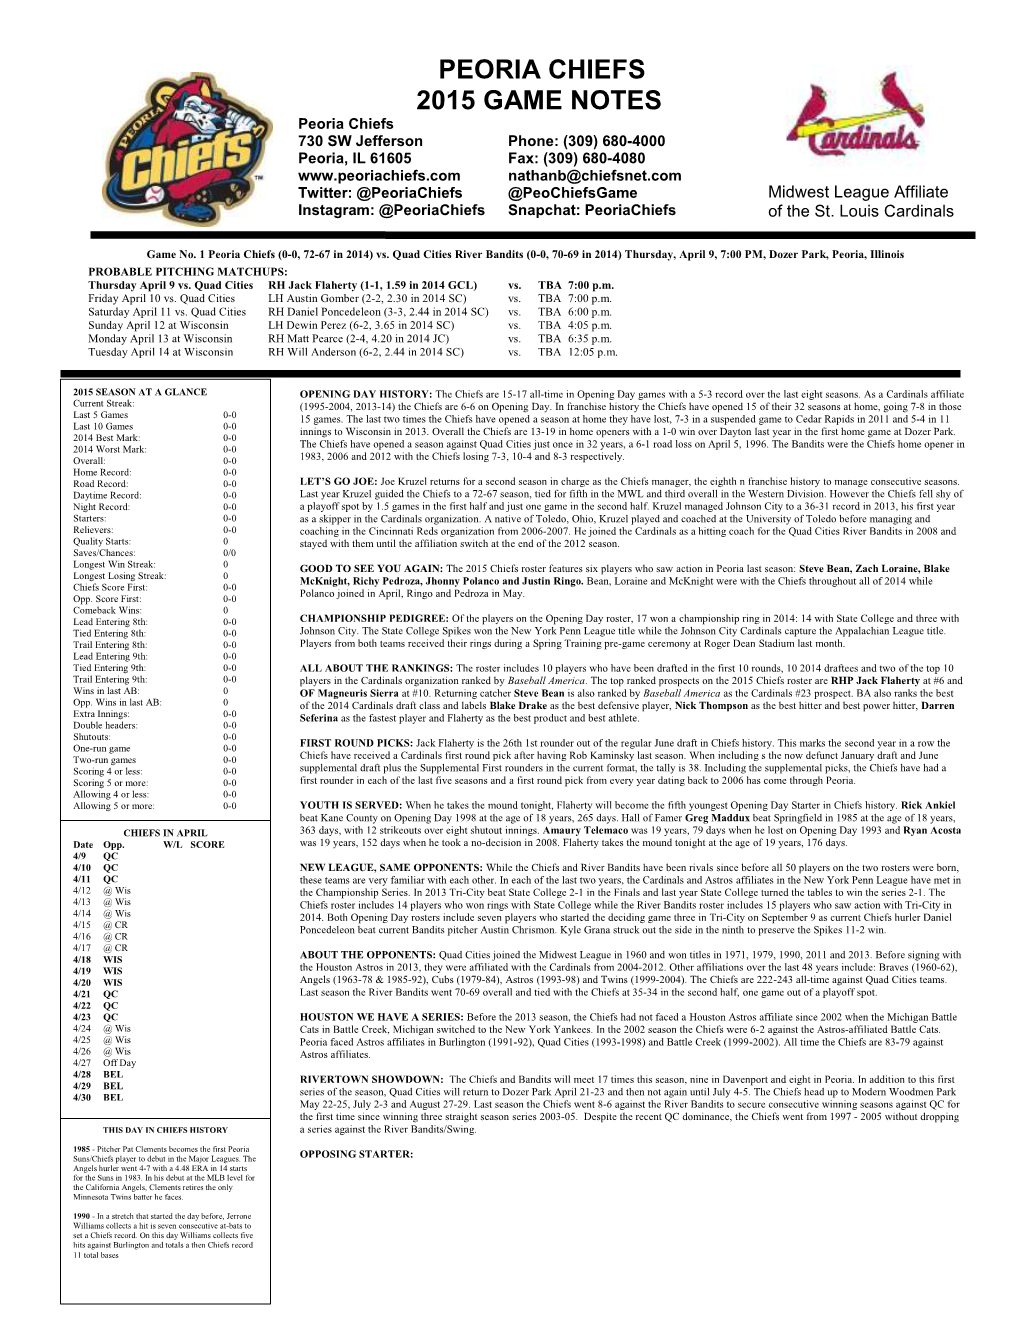 Peoria Chiefs 2015 Game Notes